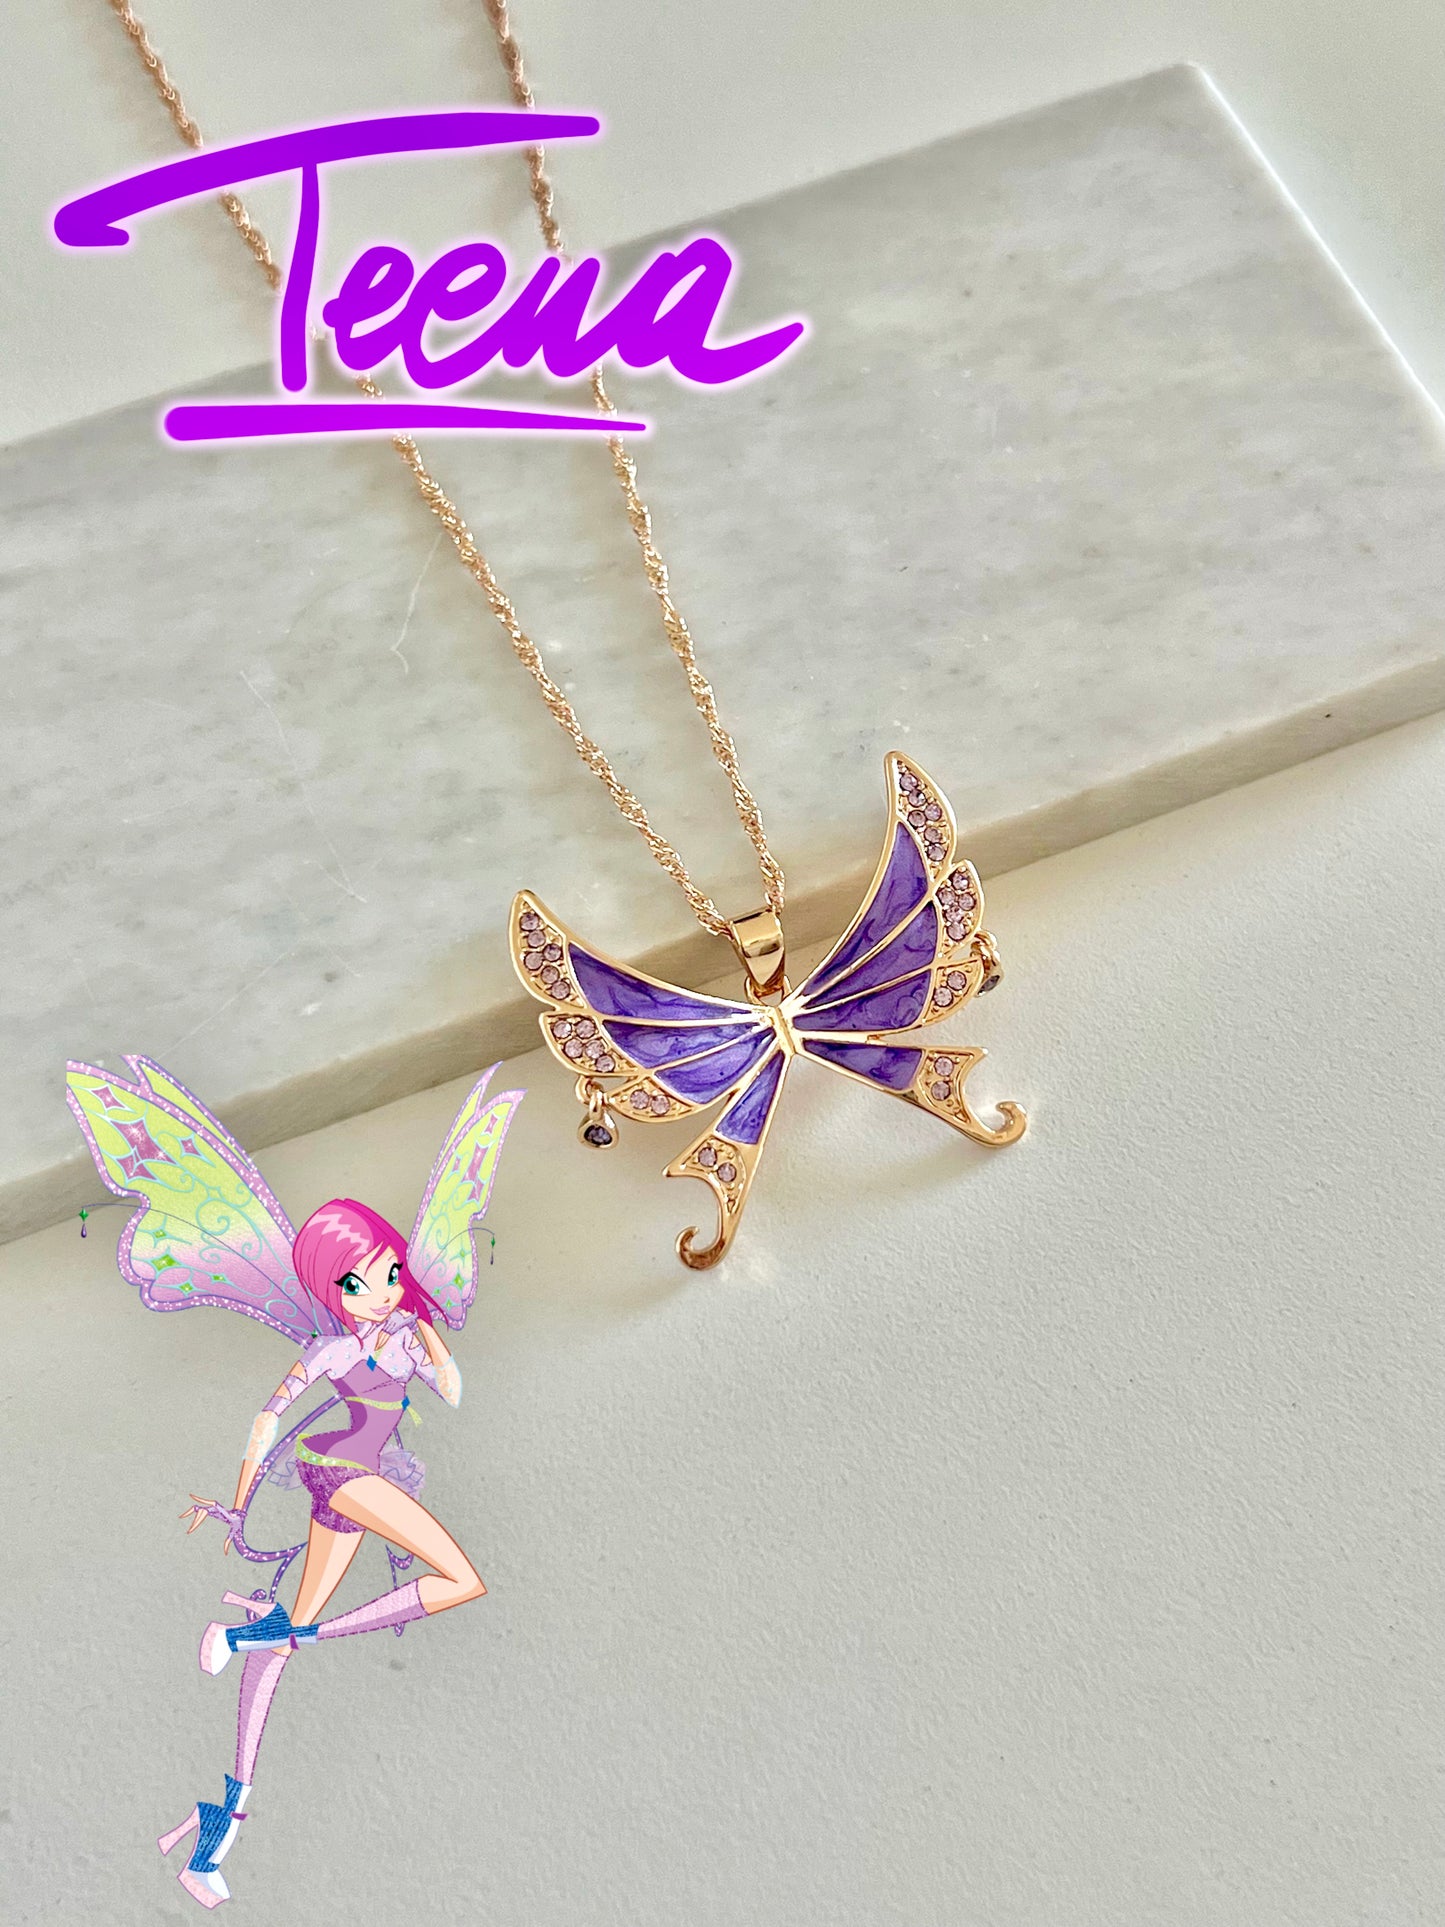 Tecna The Winx Club Necklace